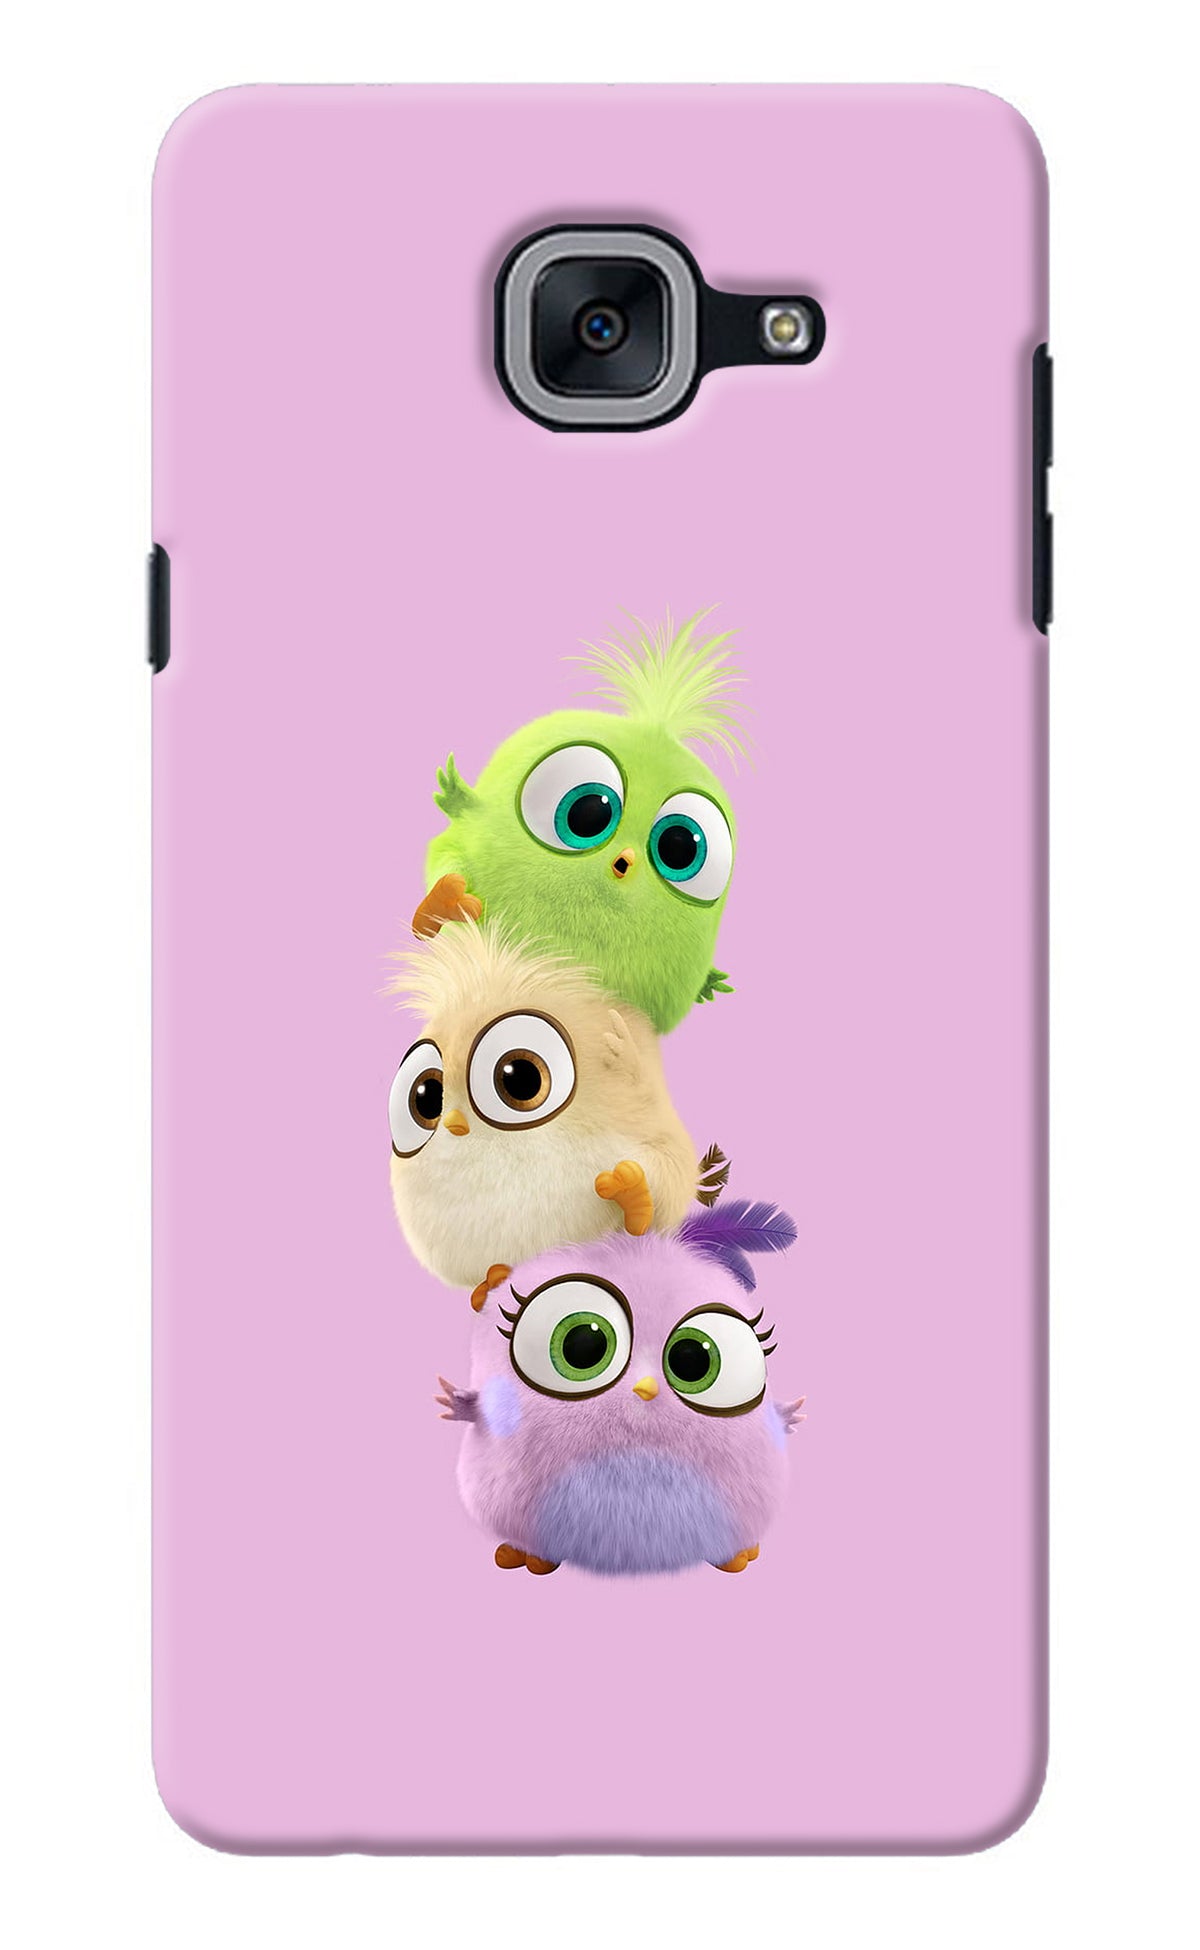 Cute Little Birds Samsung J7 Max Back Cover